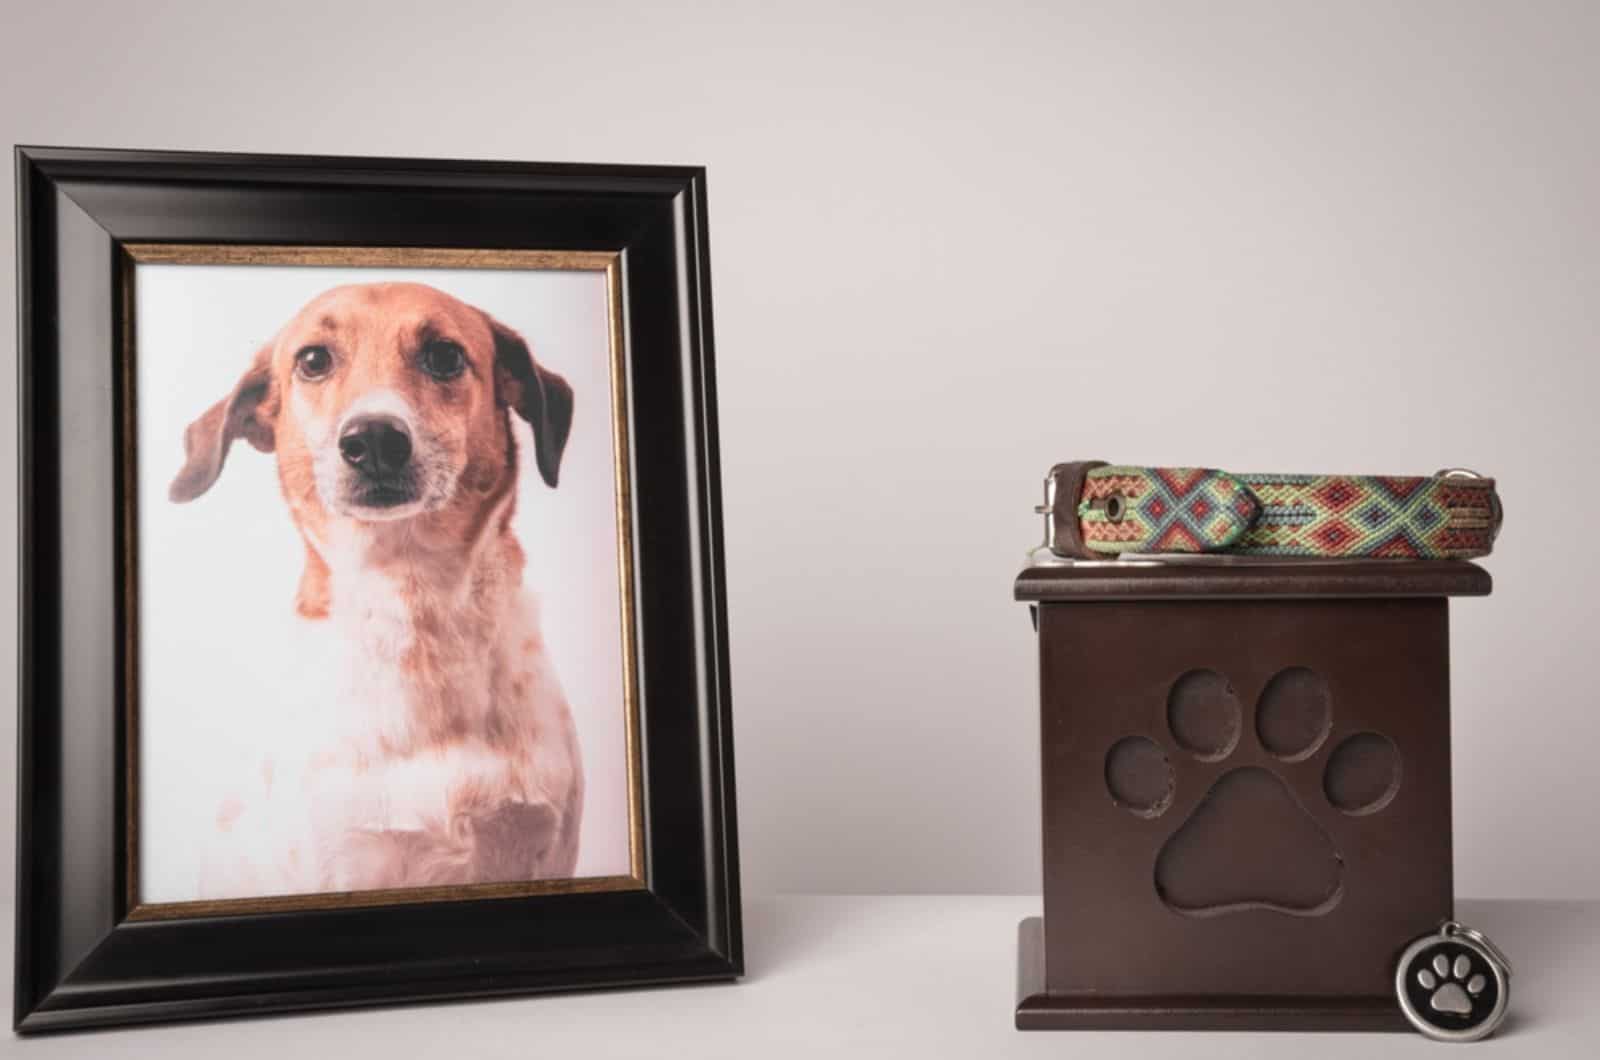 photo of dog and memory box